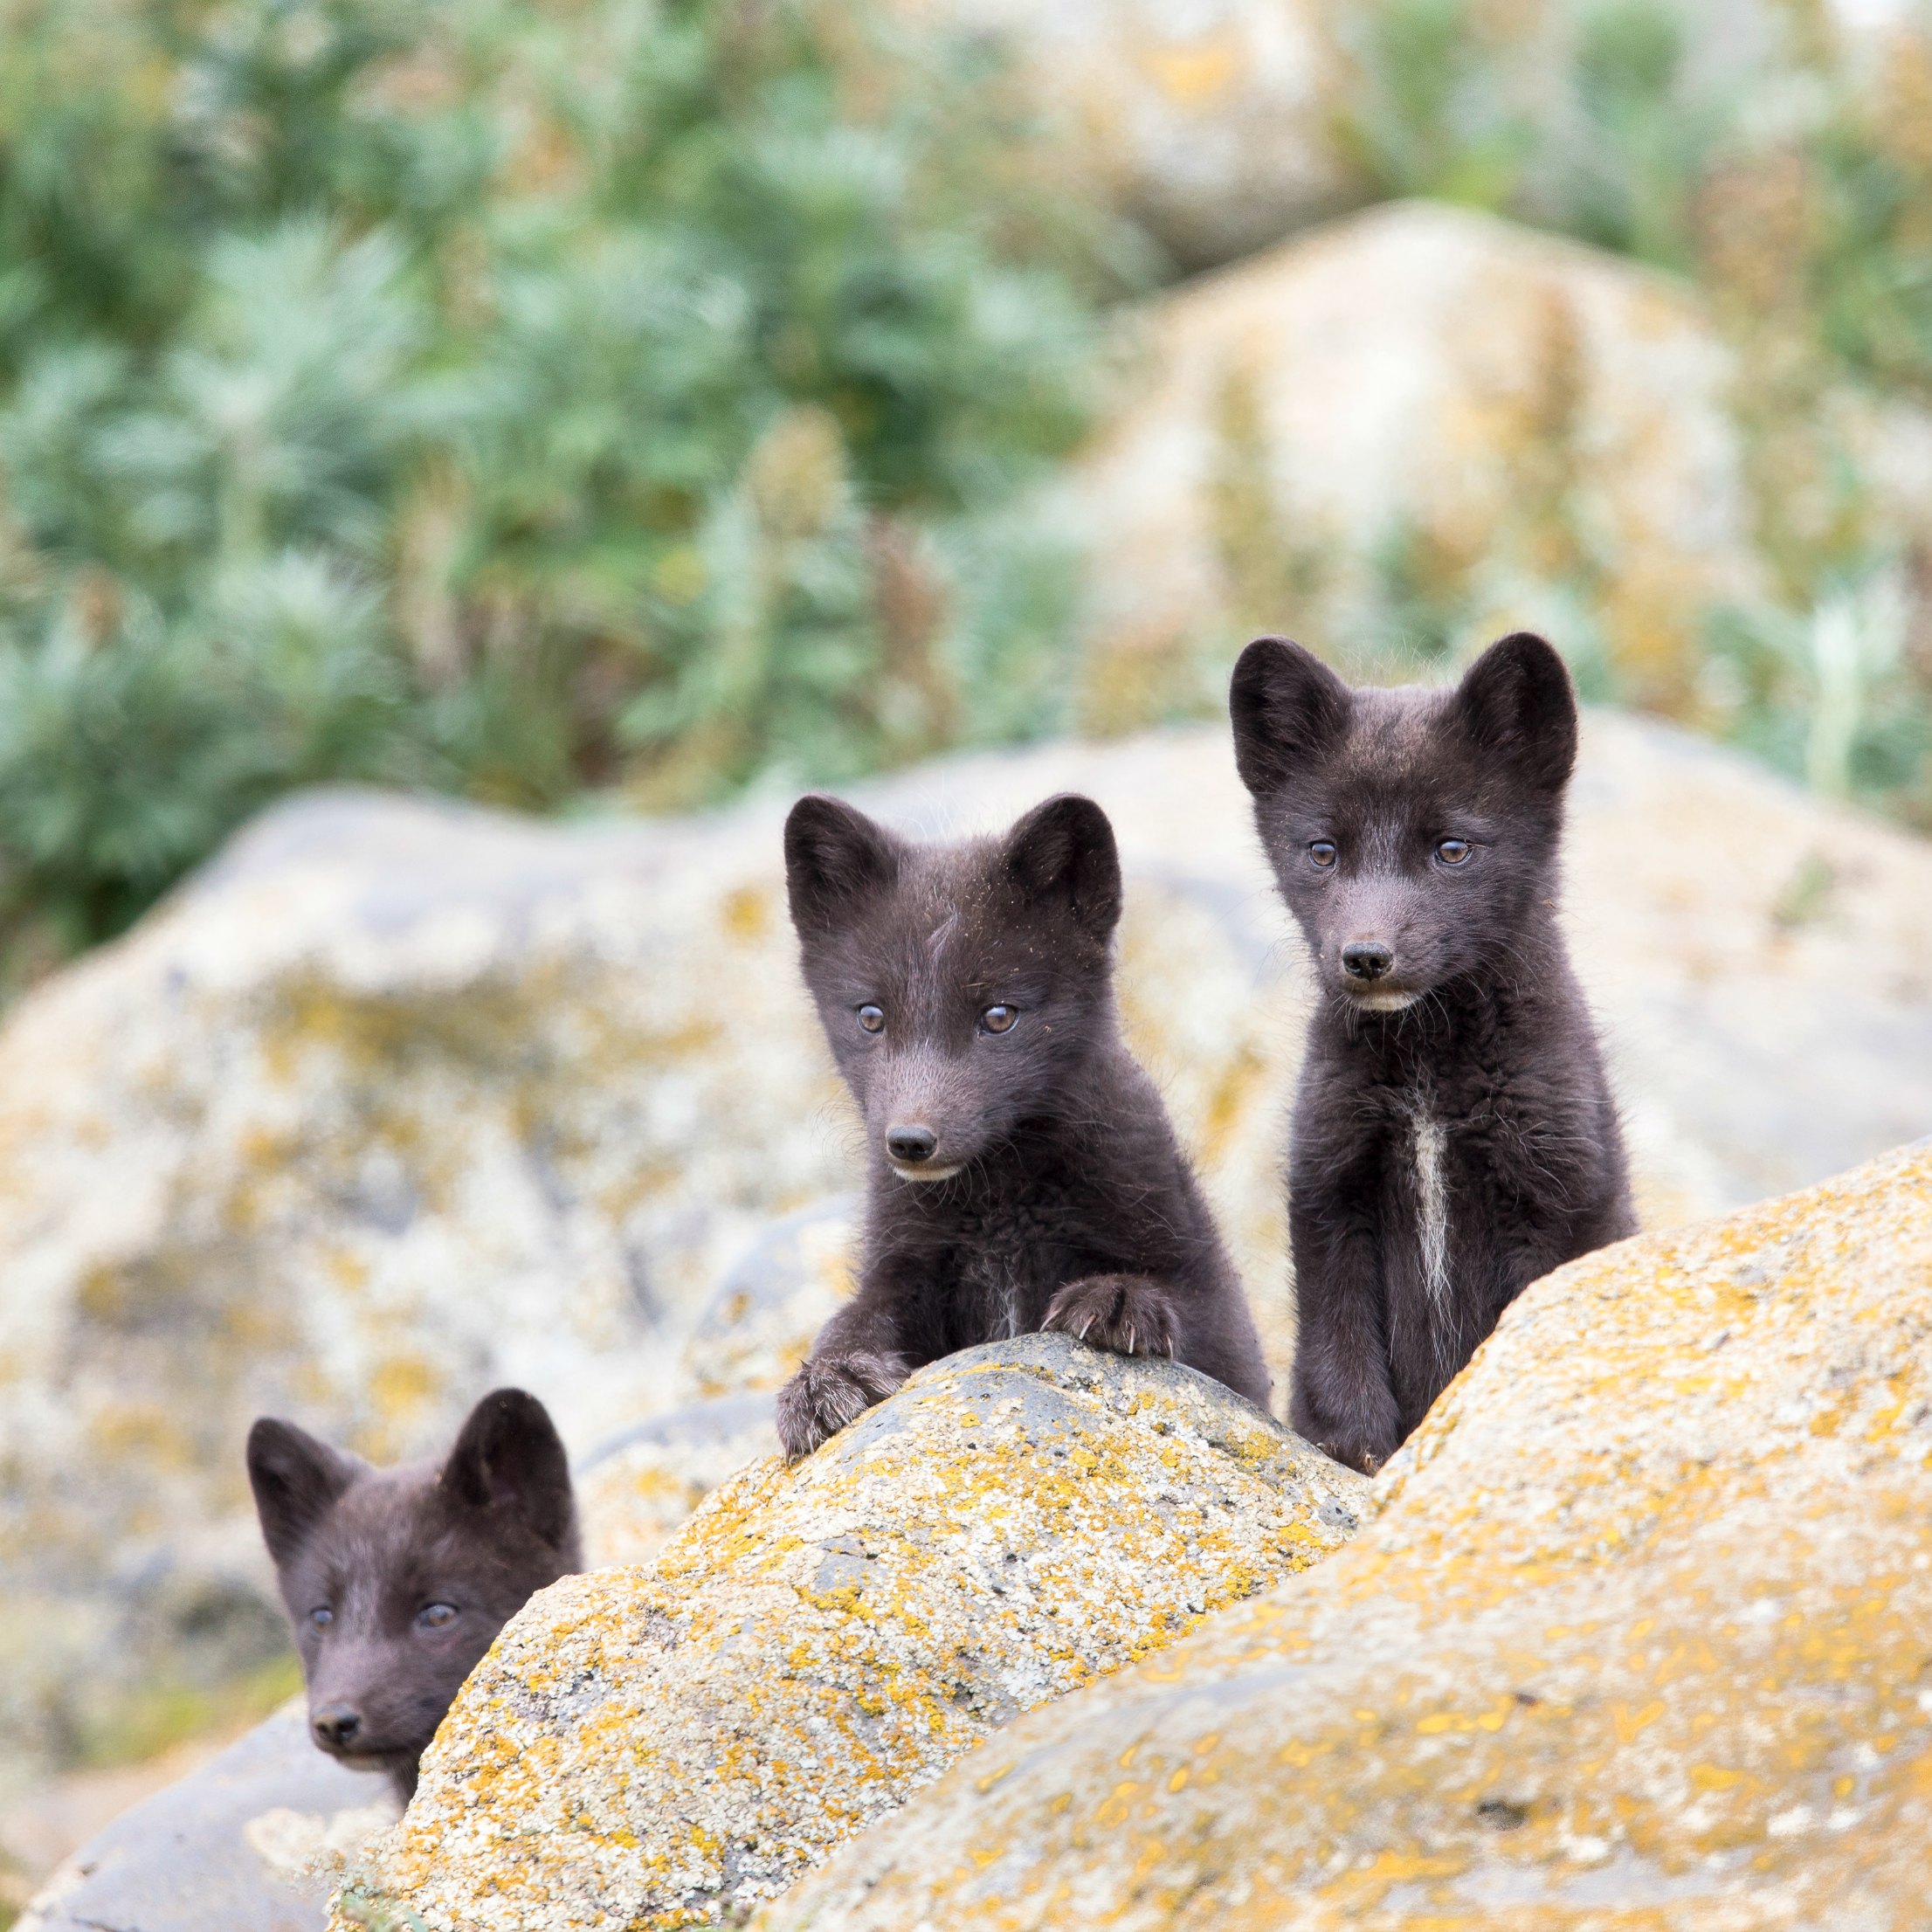 Three bears on a rock